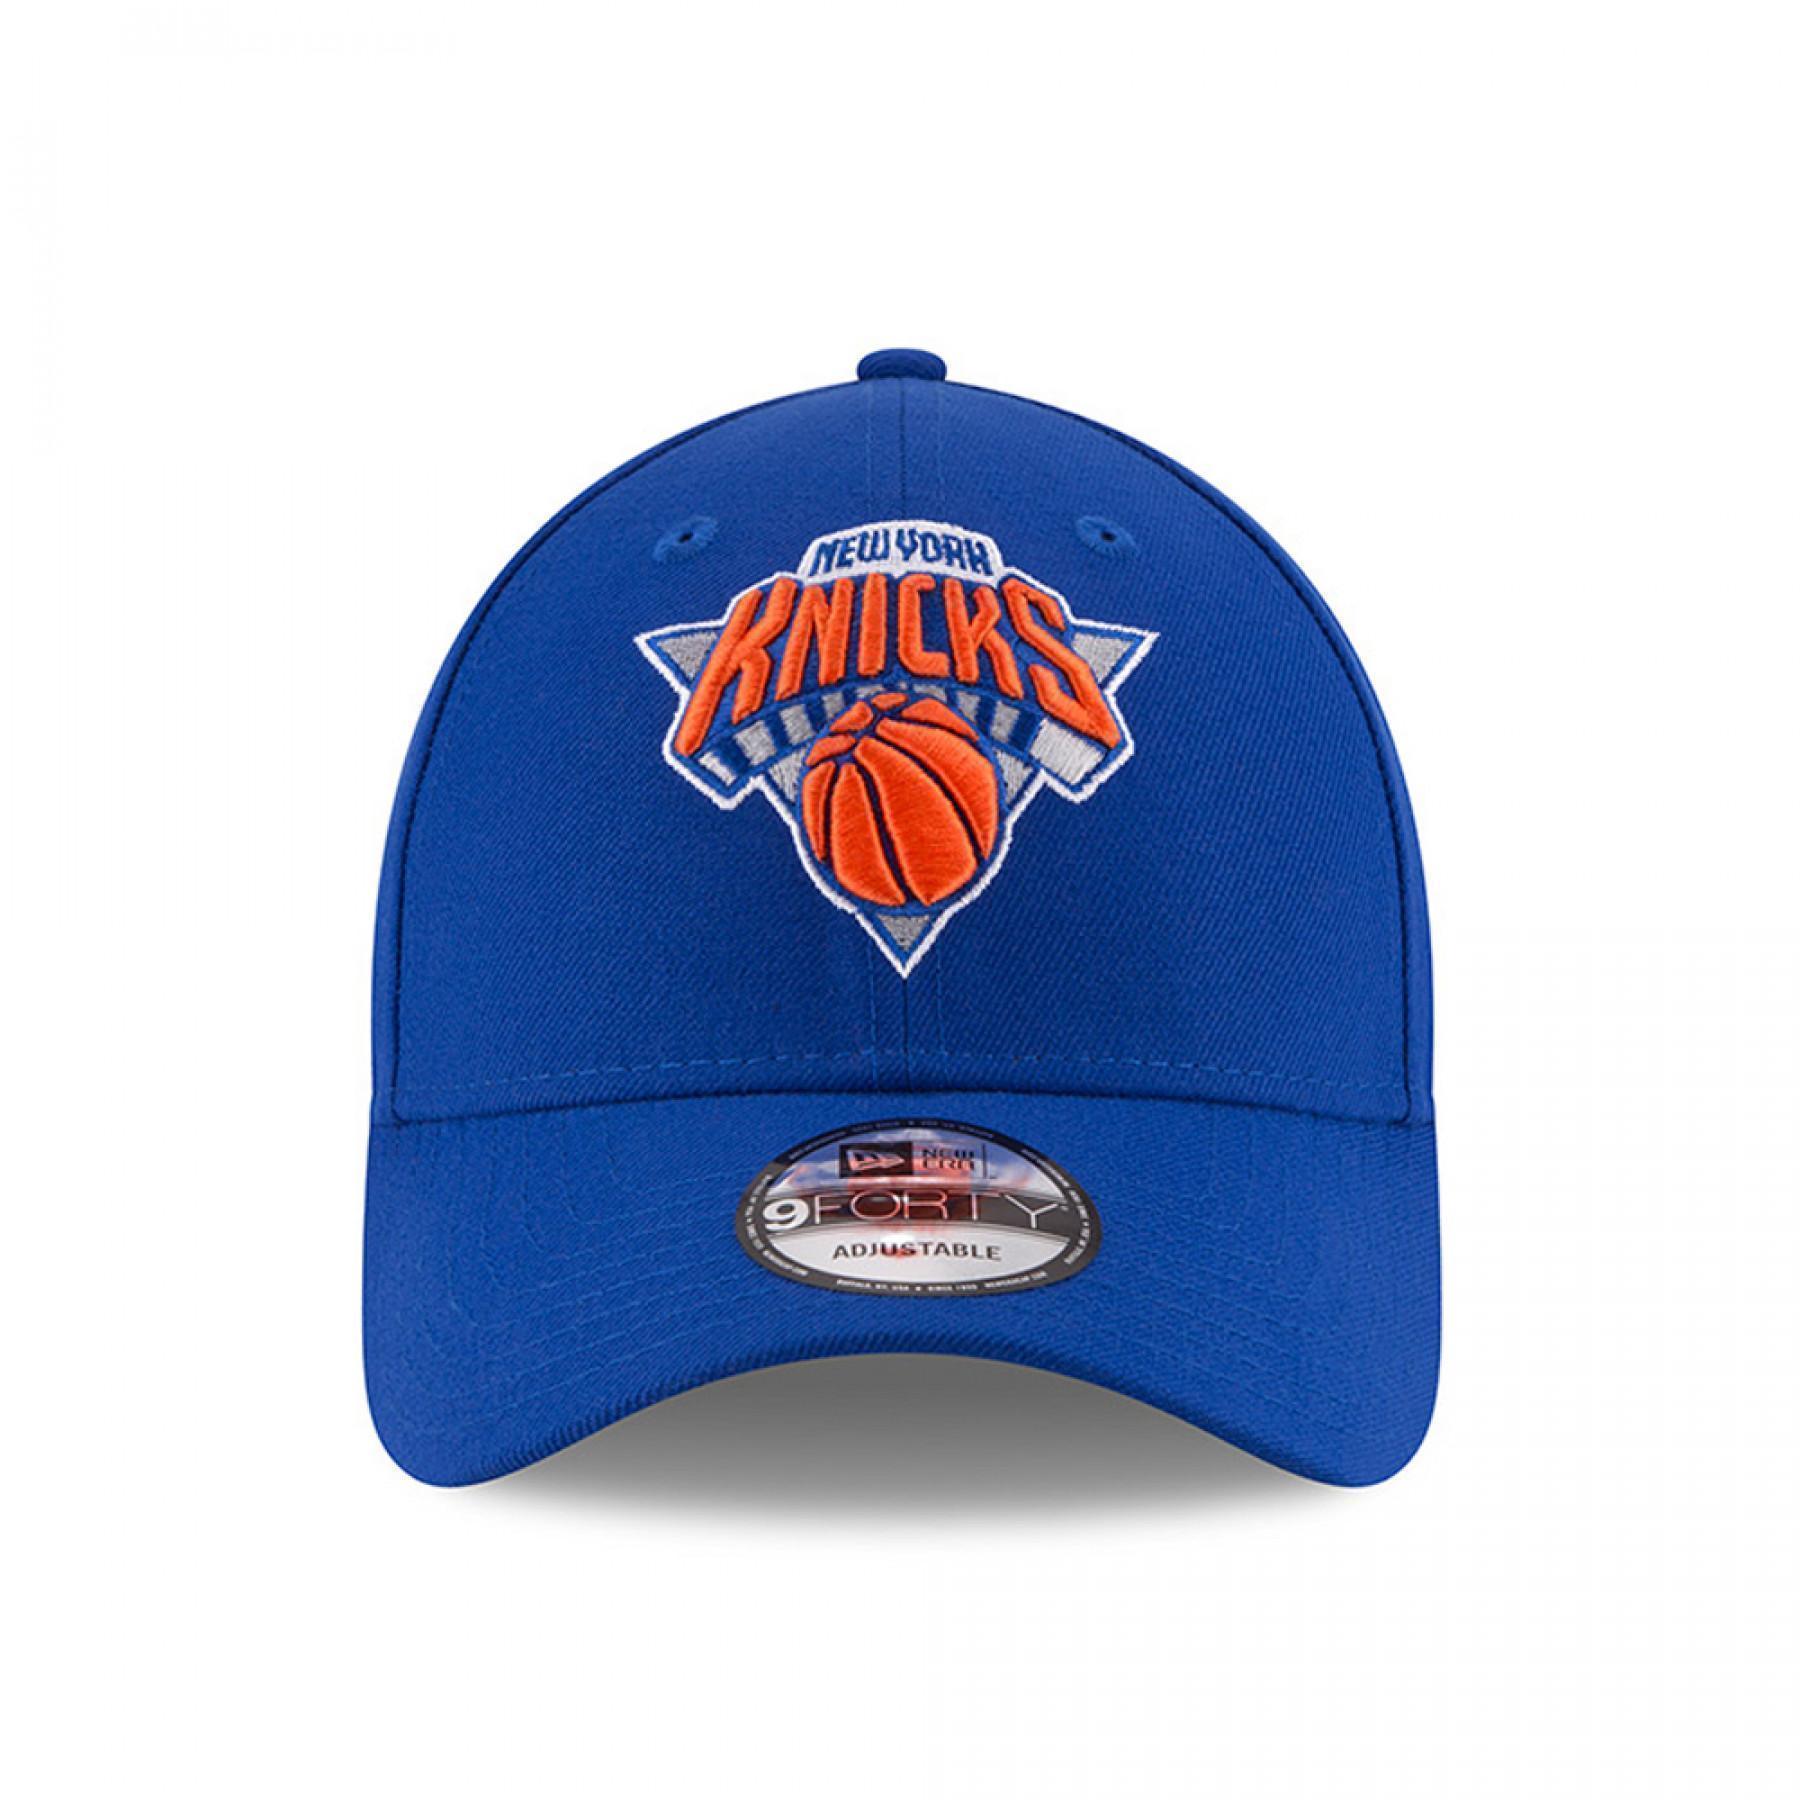 Kappe New Era The League 9FORTY New York Knicks